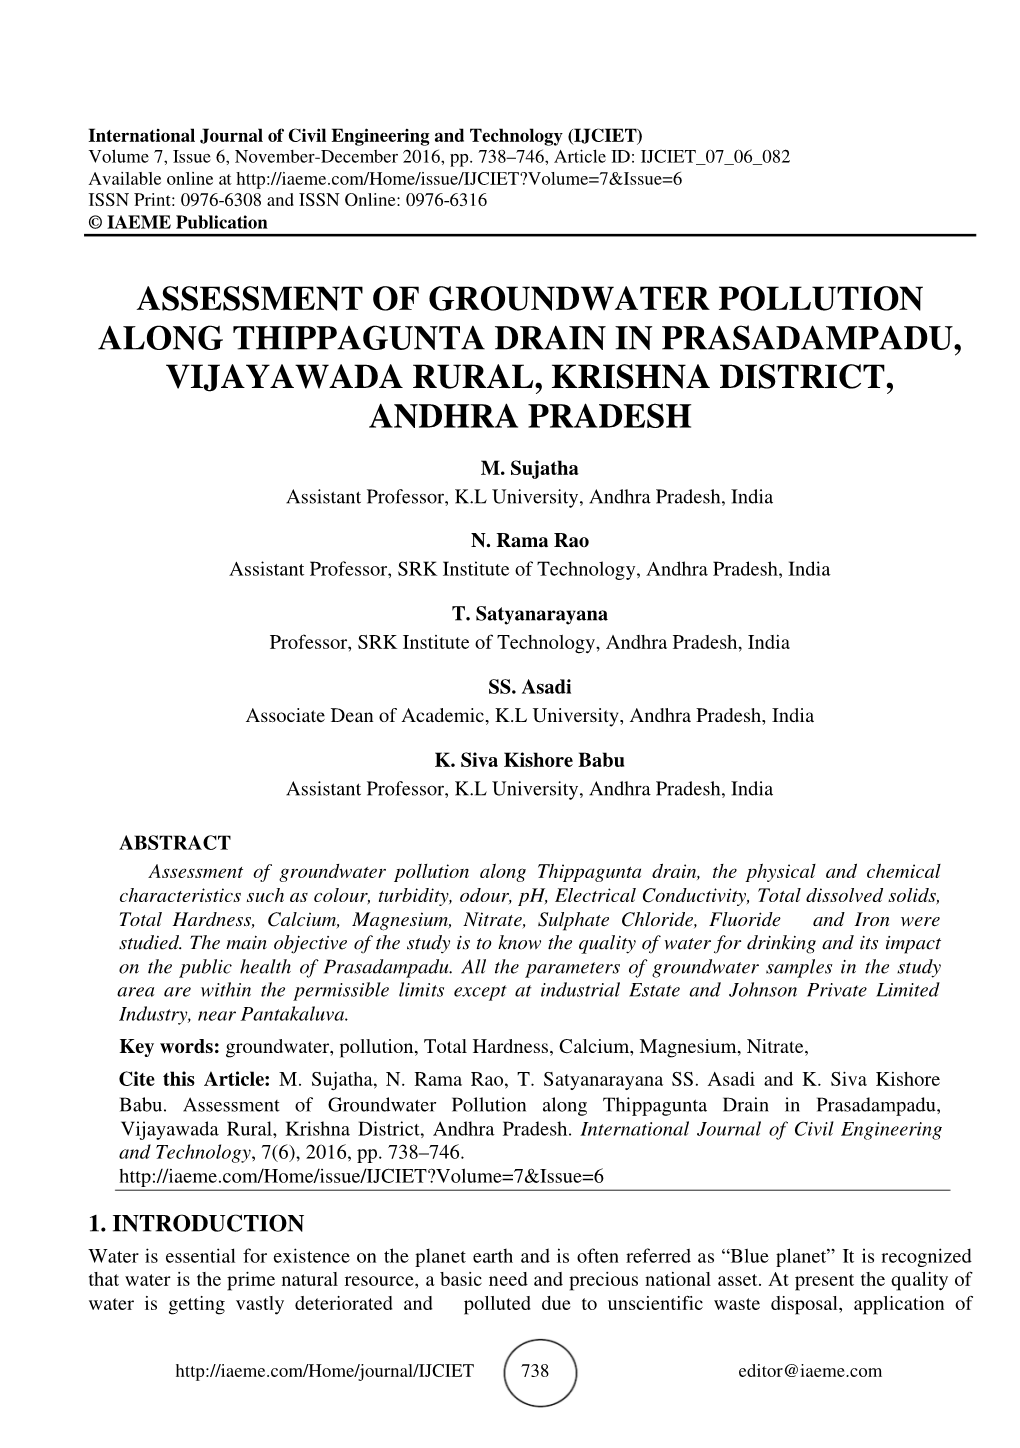 Assessment of Groundwater Pollution Along Thippagunta Drain in Prasadampadu, Vijayawada Rural, Krishna District, Andhra Pradesh